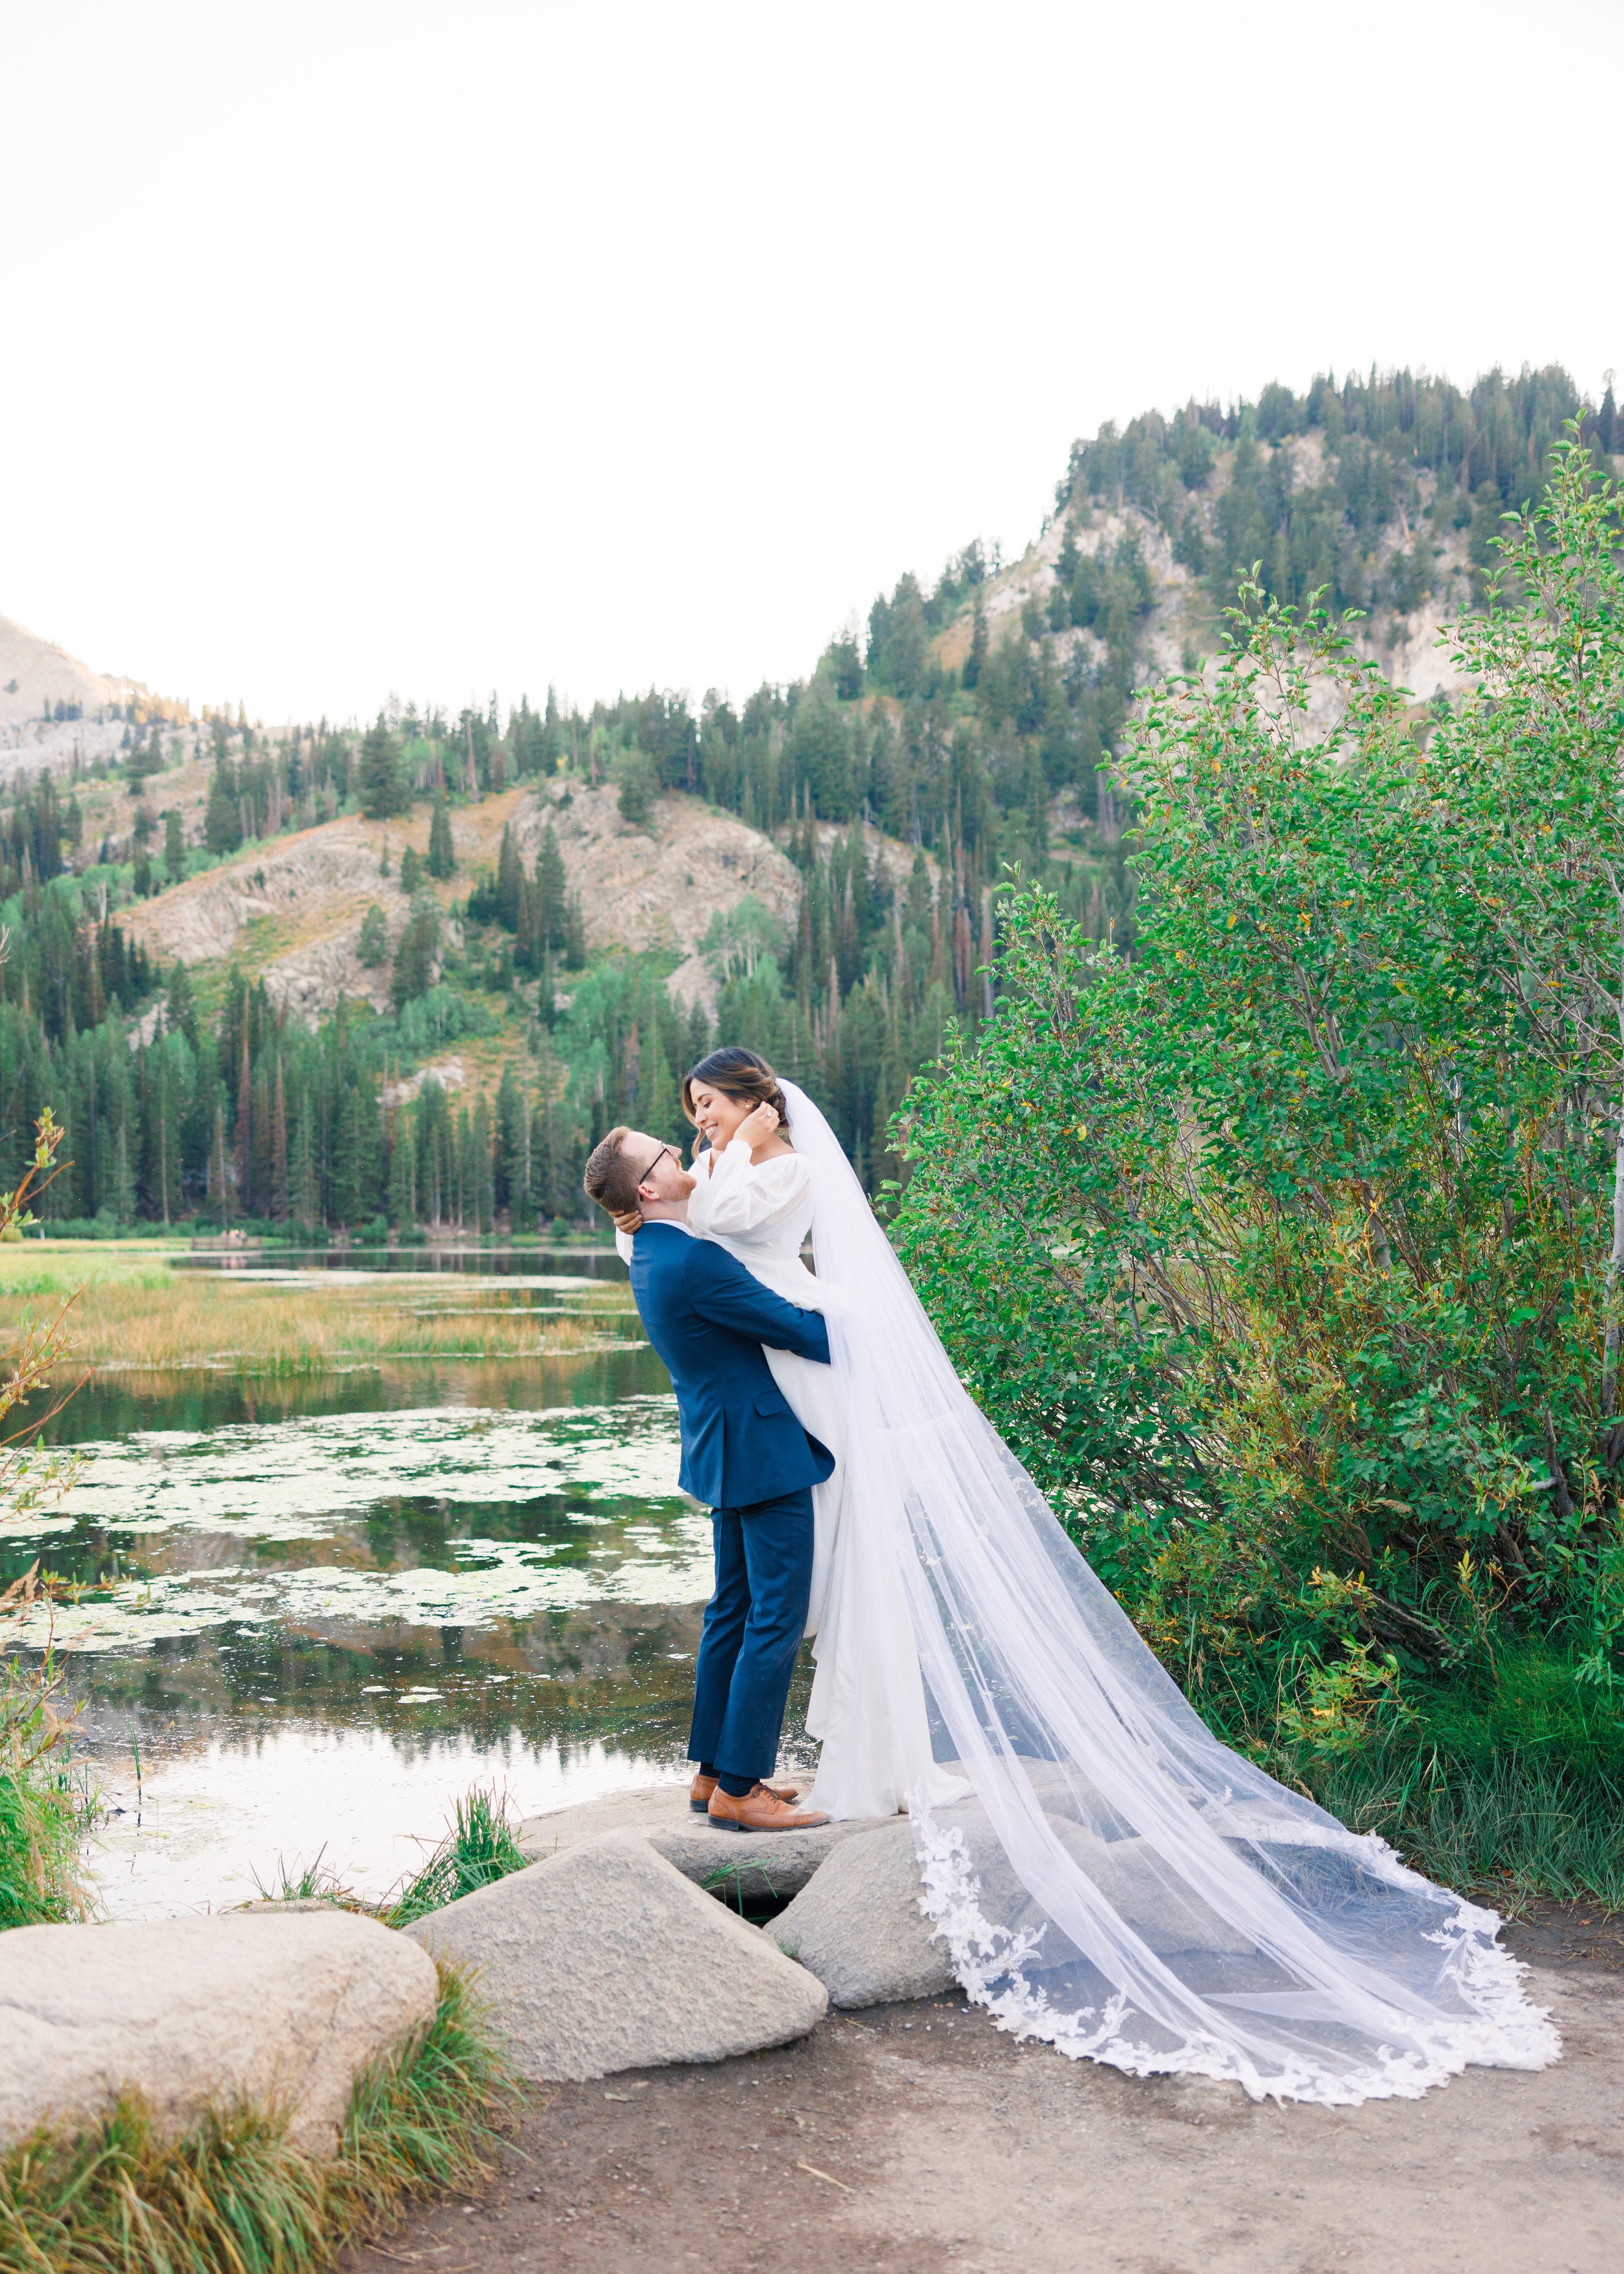  A bride and groom in the Utah mountains hugging captured by Savanna Richardson Photography. mountain stream formals #SavannaRichardsonPhotography #SavannaRichardsonWeddings #bridals #formals #bouquets #Utahweddingphotographers #Wedding 